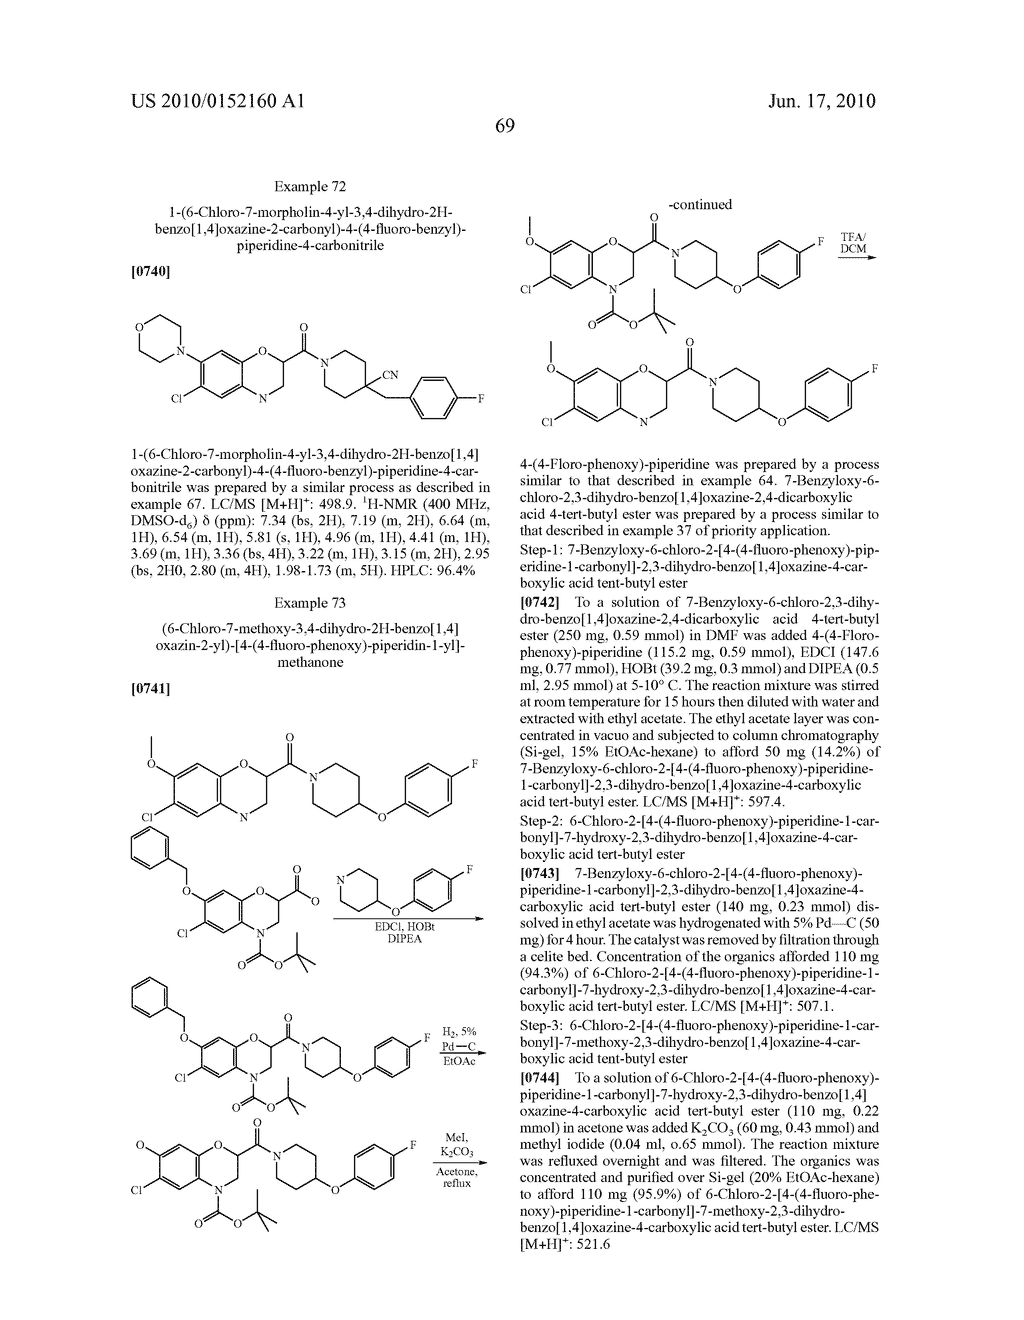 NOVEL BENZODIOXANE AND BENZOXAZINE DERIVATIVES USEFUL AS CC CHEMOKINE RECEPTOR LIGANDS - diagram, schematic, and image 70